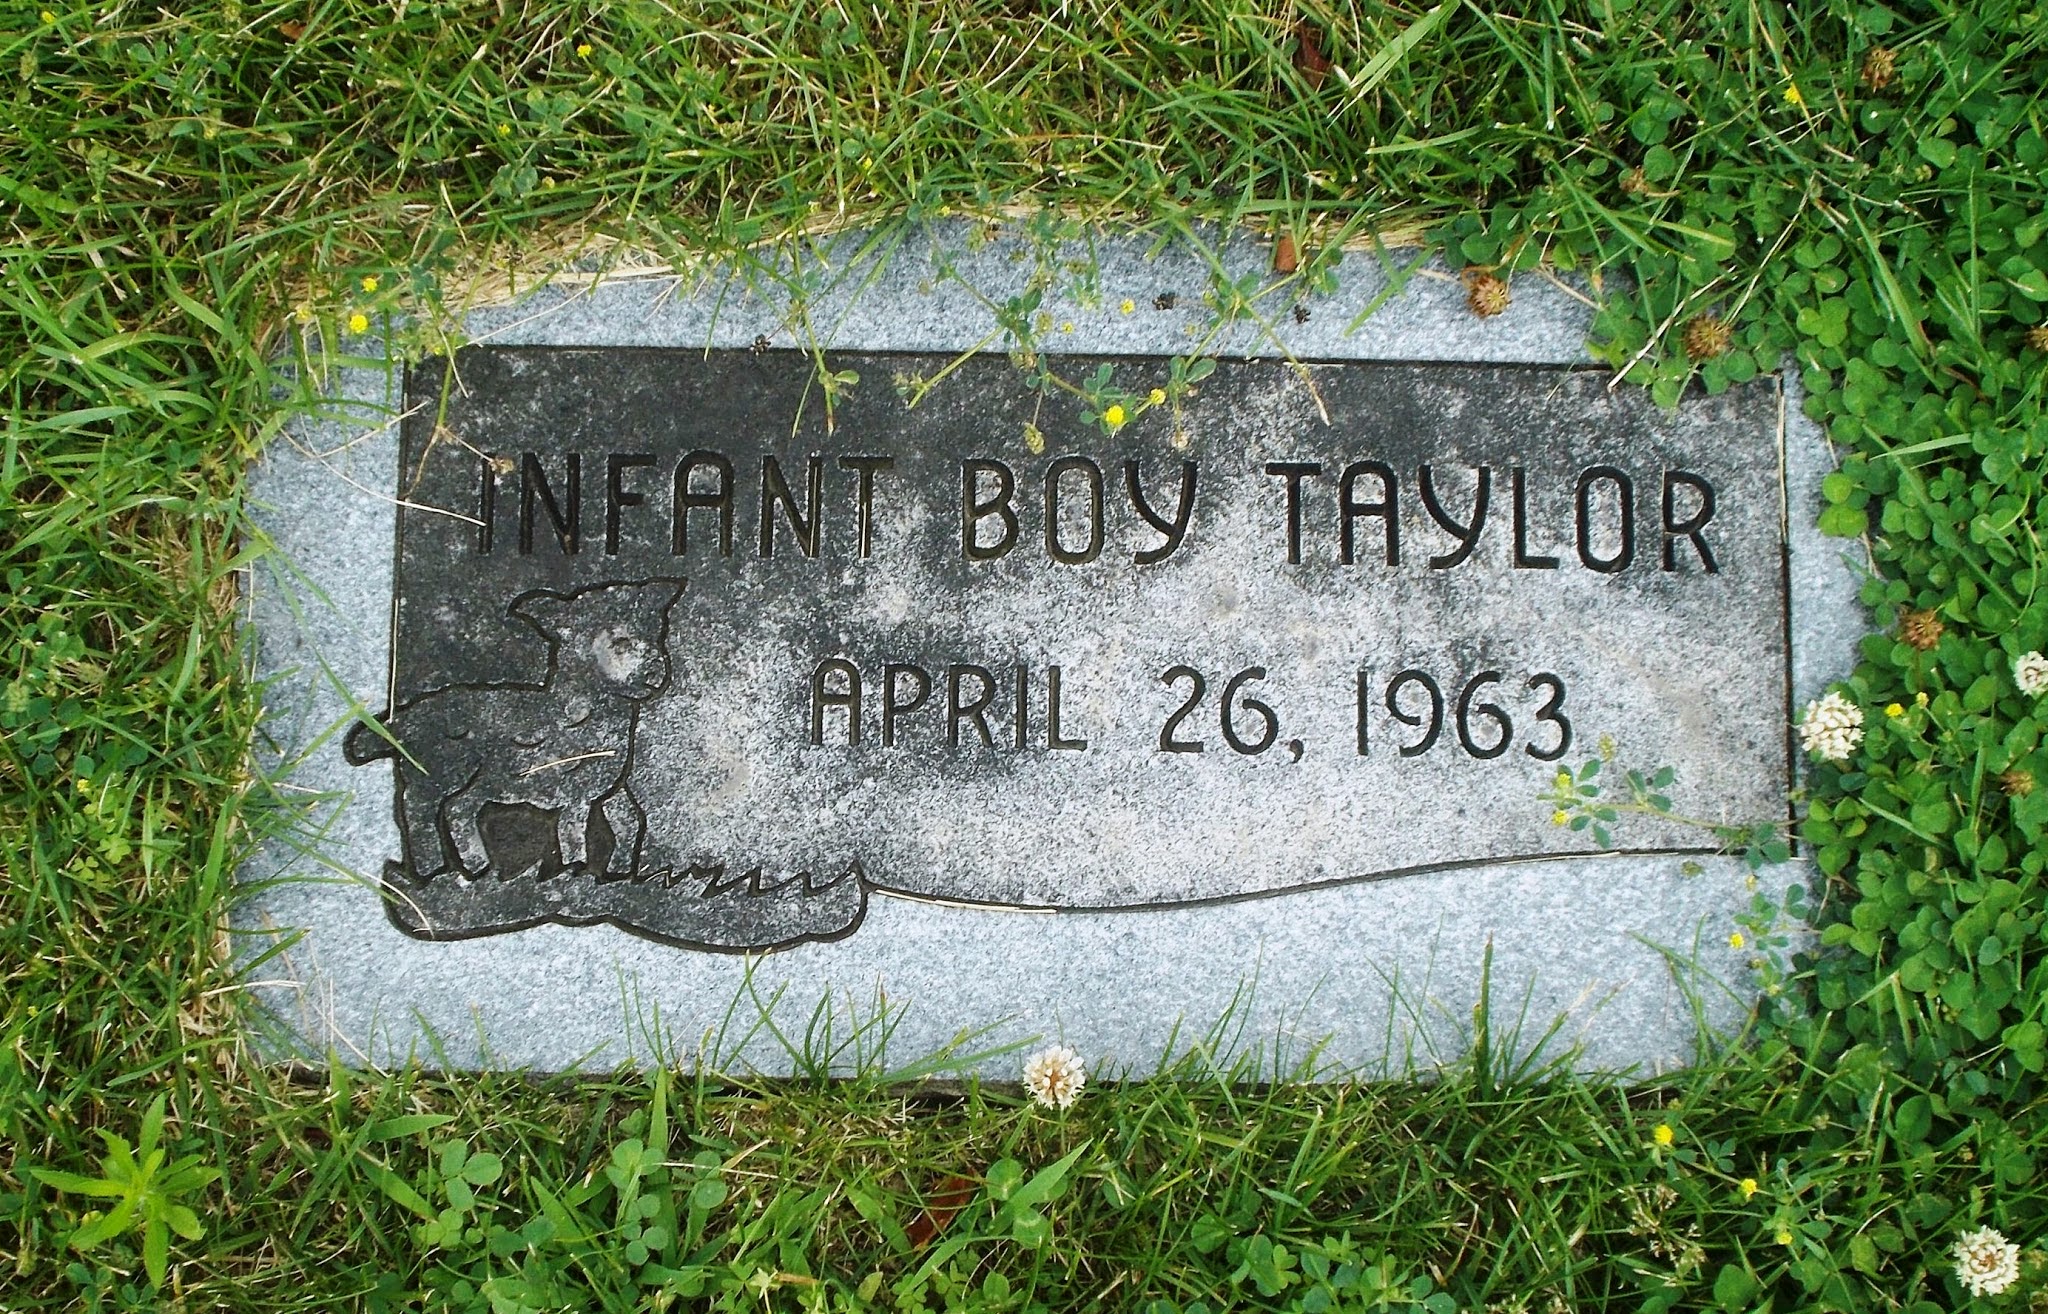 Infant Boy Taylor